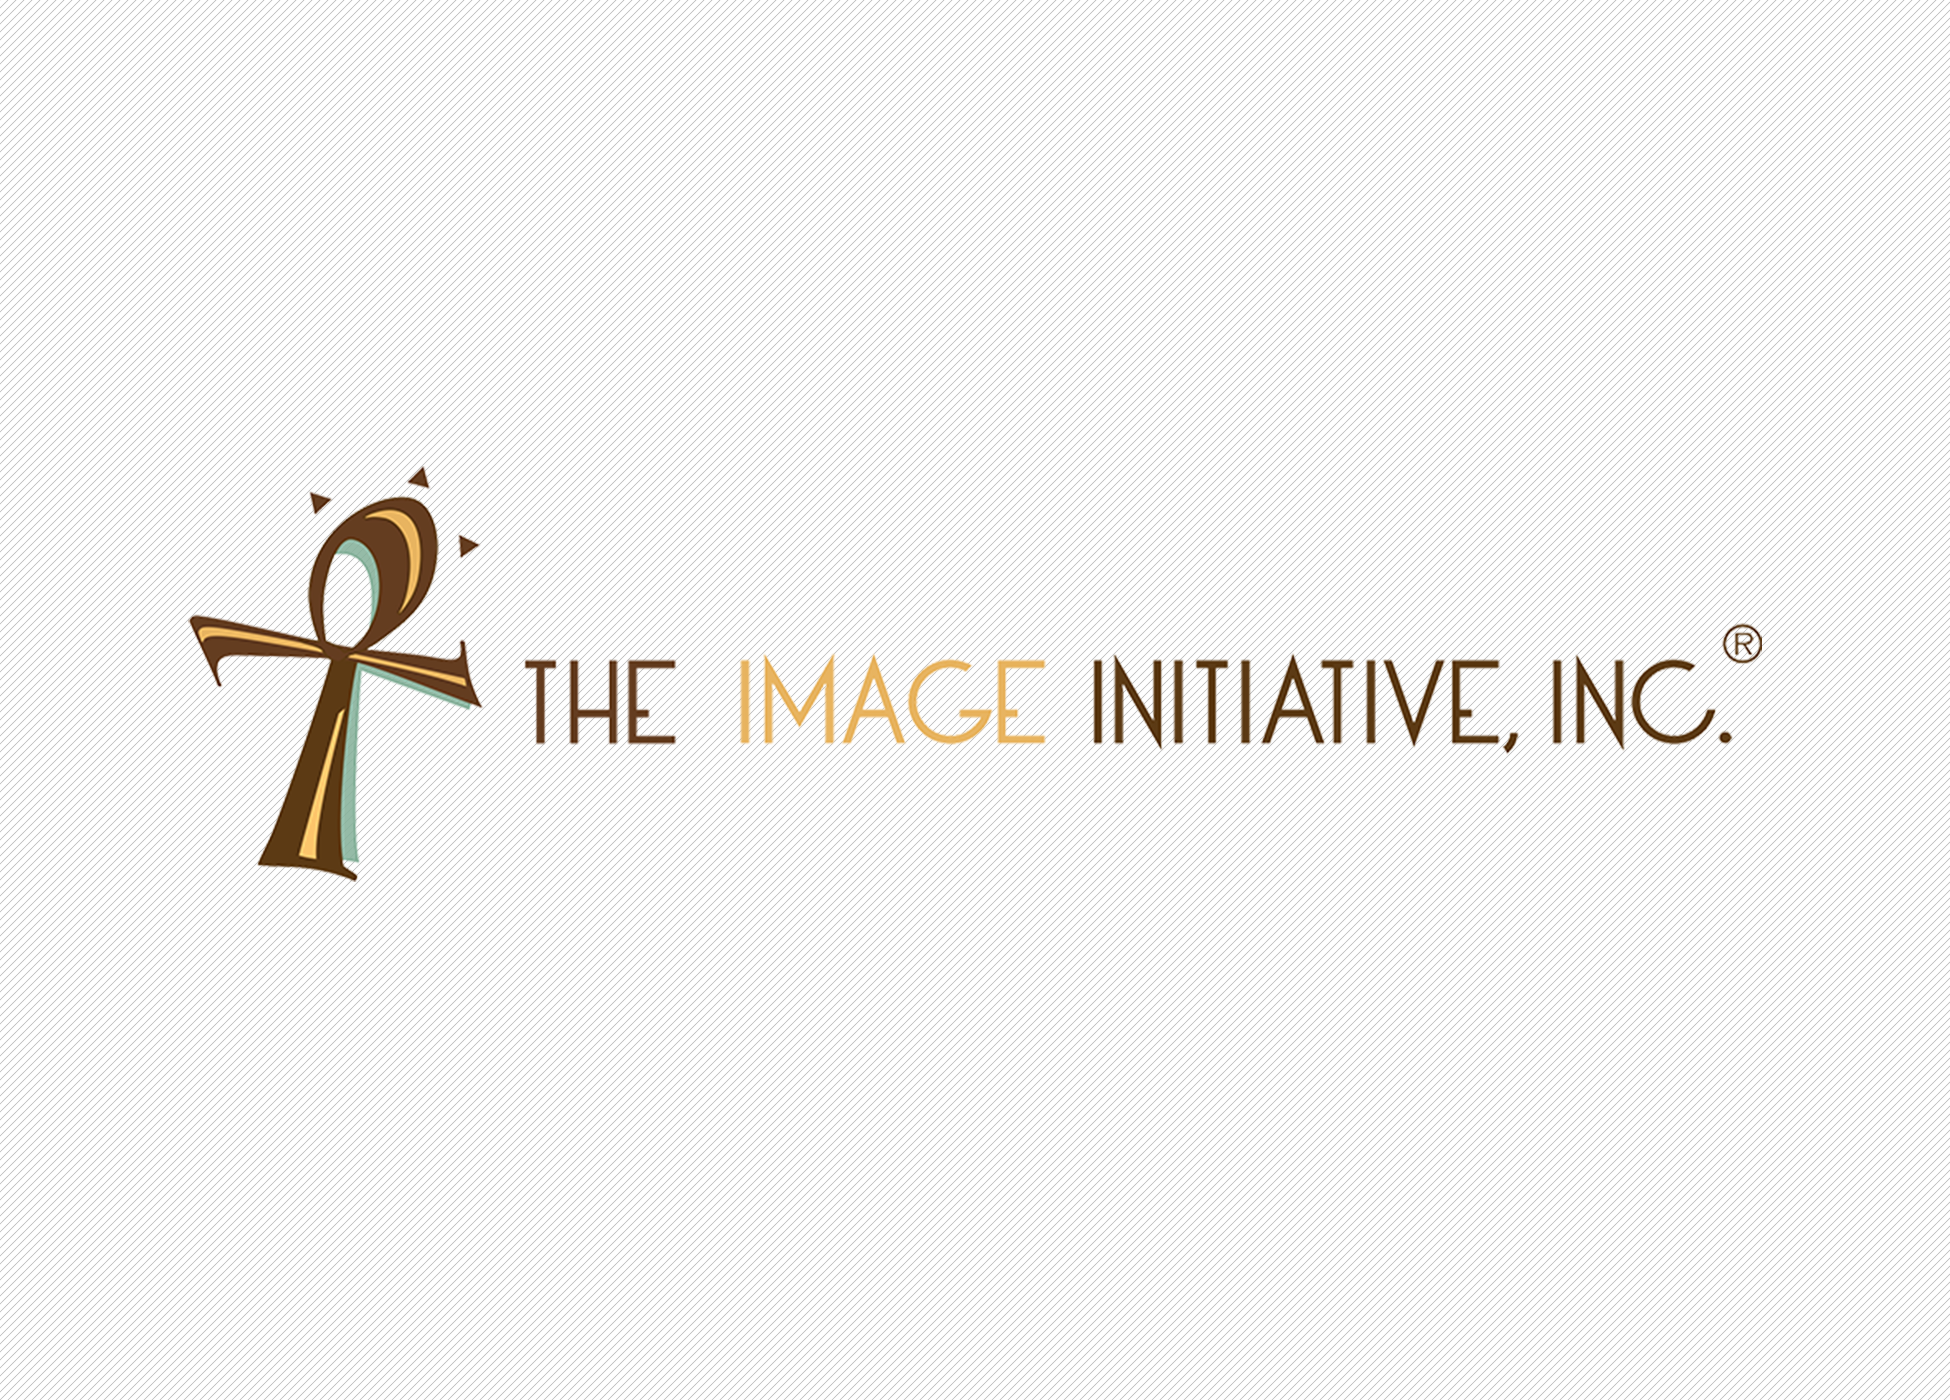 Image Initiative logo